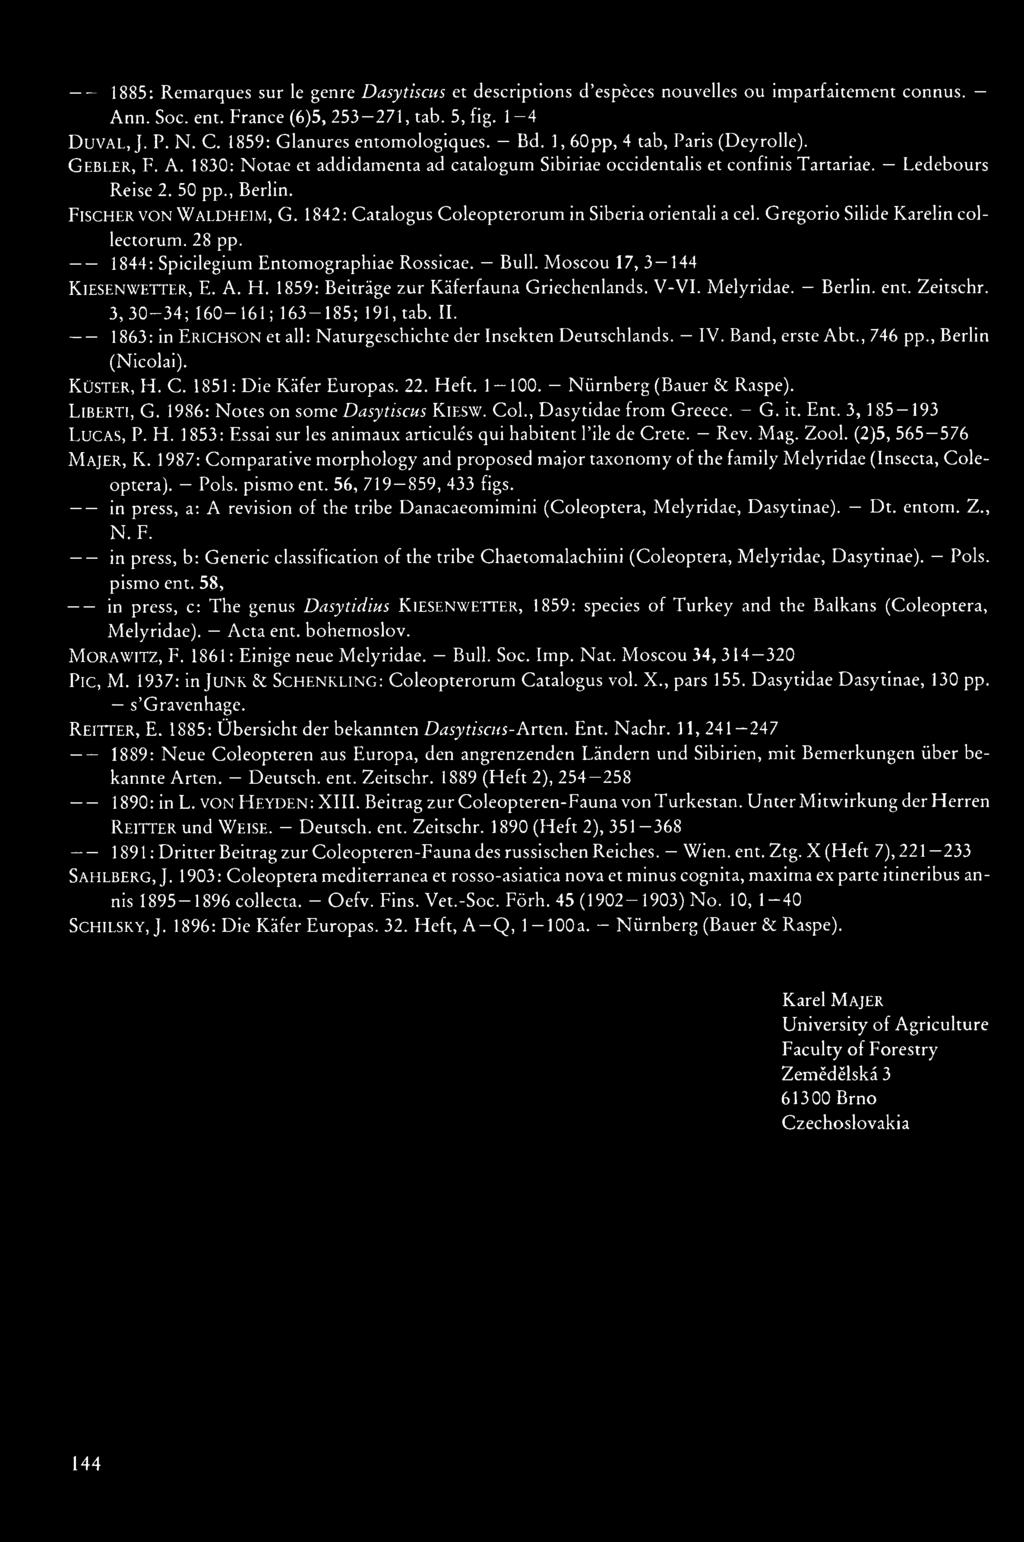 , Berlin. Fischer VON Waldheim, G. 1842: Catalogus Coleopterorum in Siberia orientali a cel. Gregorio Silide Karelin collectorum. 28 pp. 1844: Spicilegium Entomographiae Rossicae. Bull.